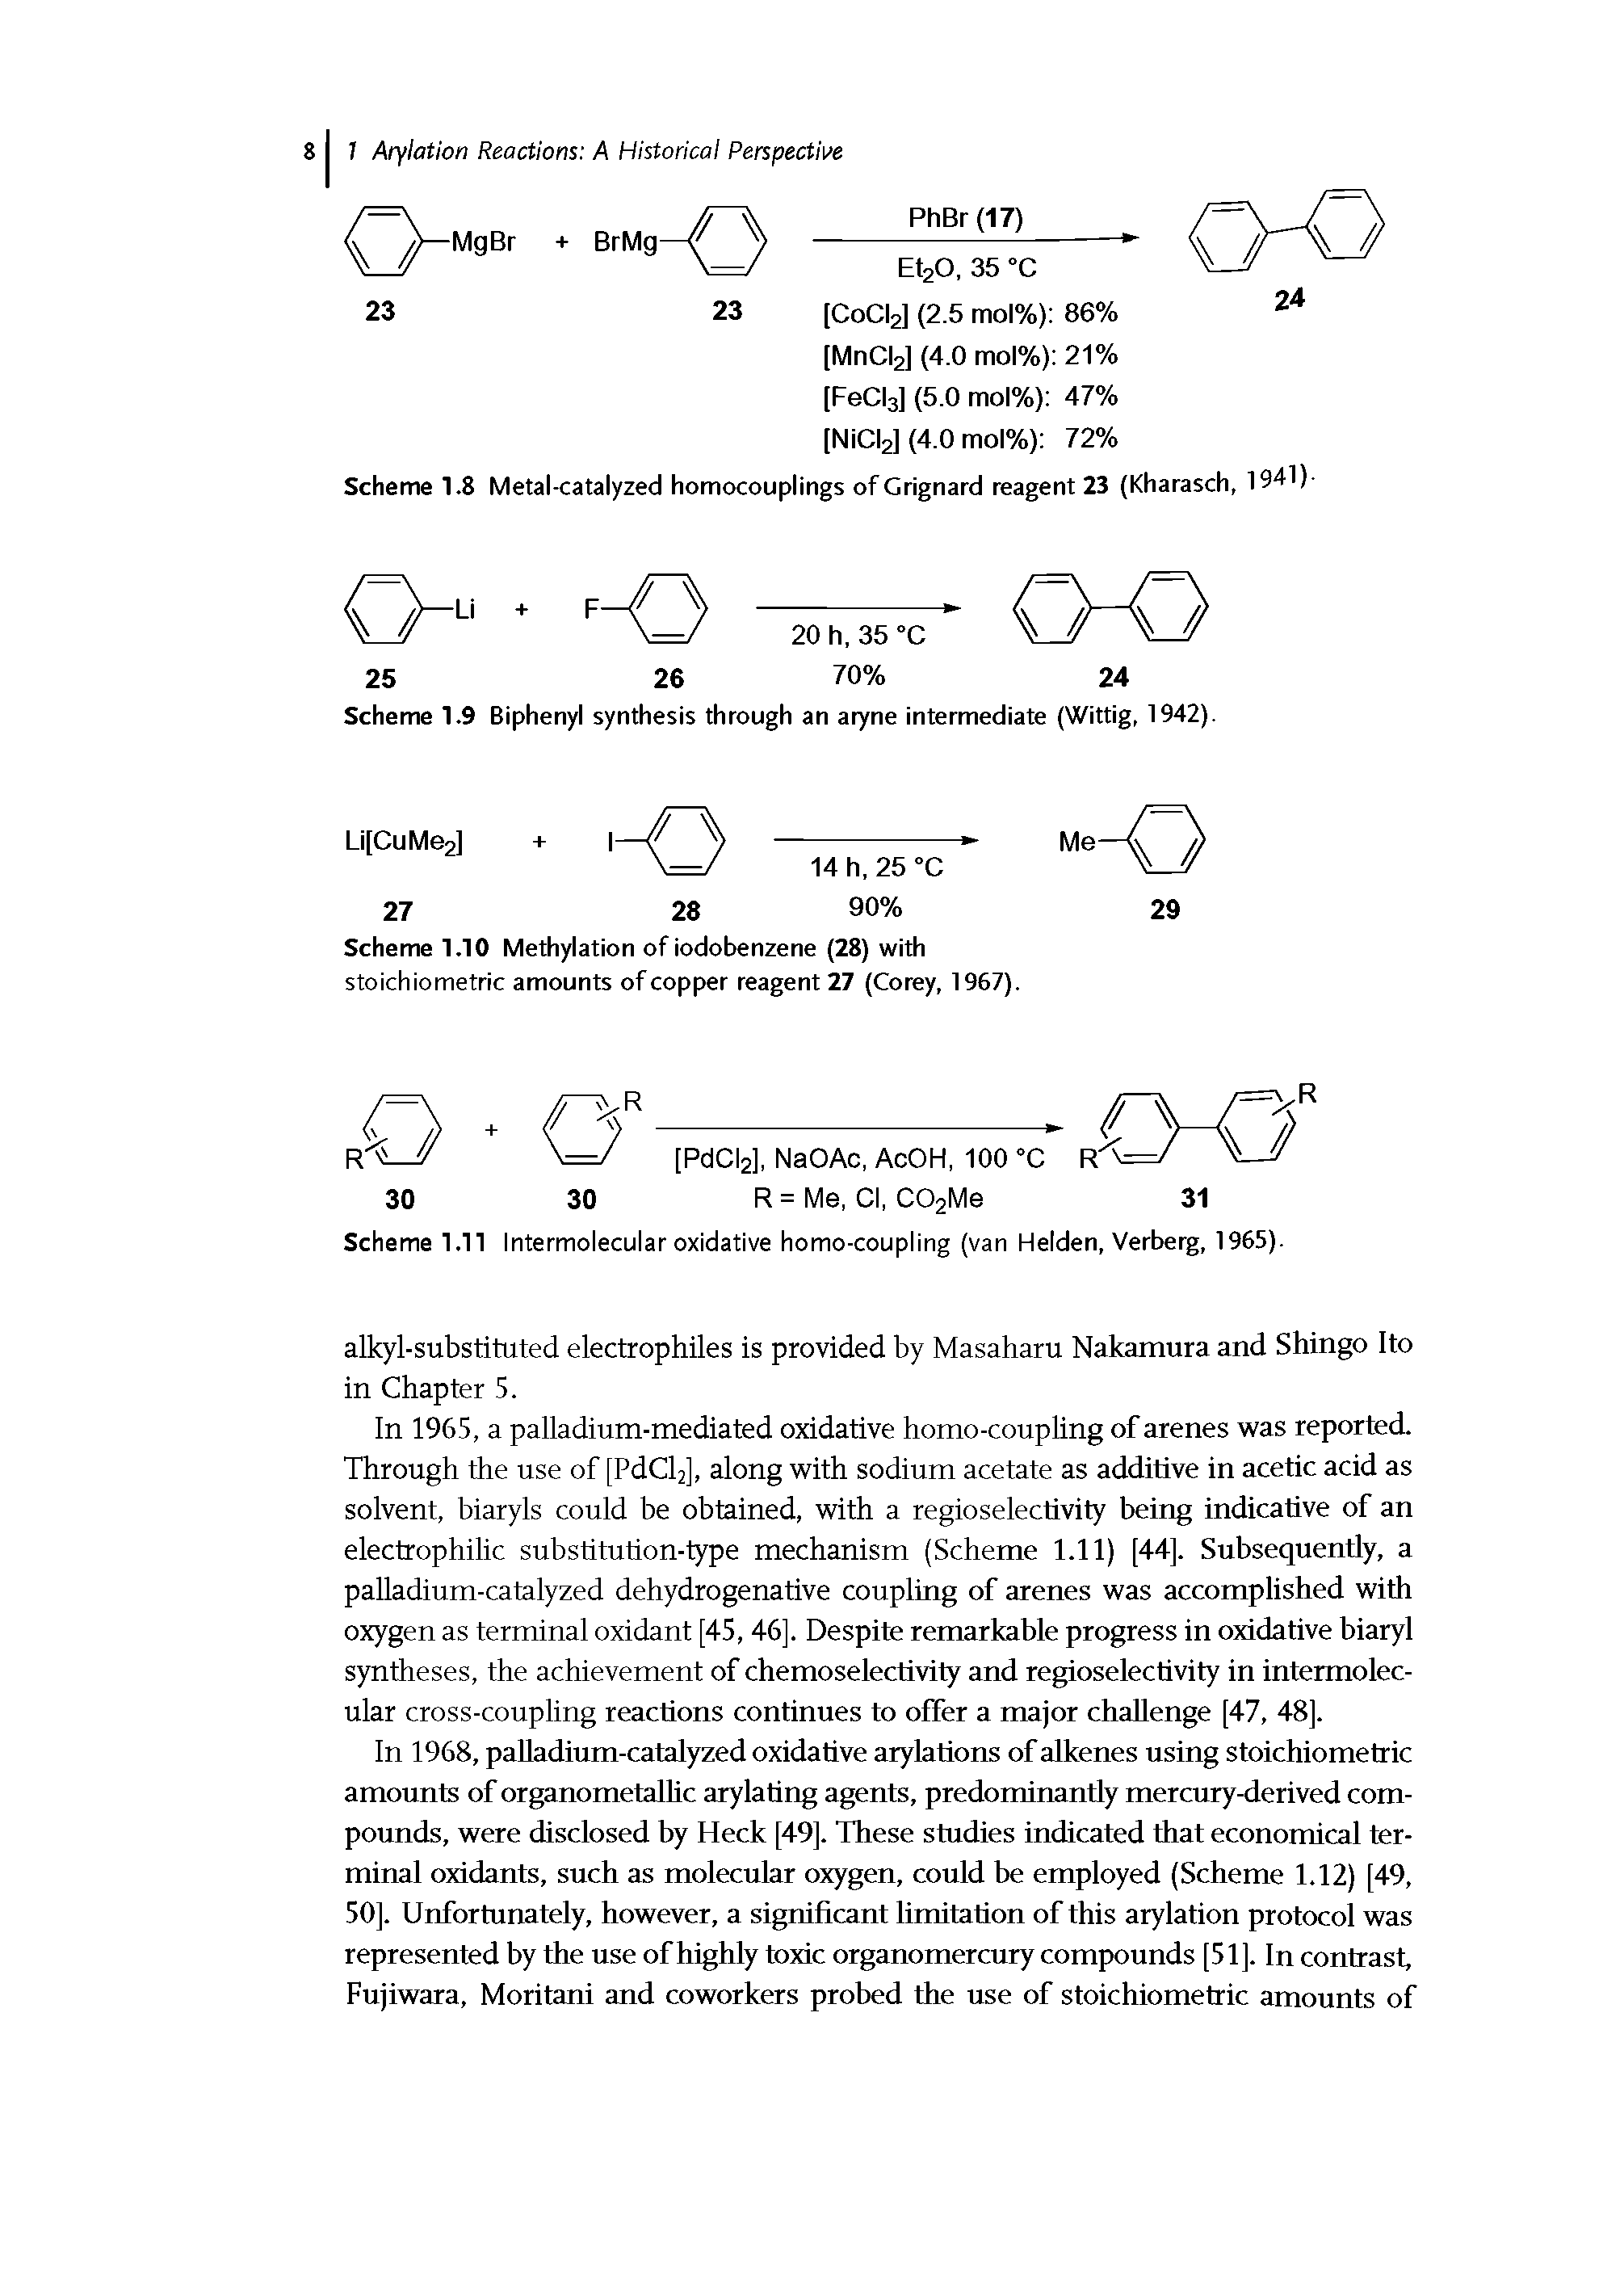 Scheme 1.9 Biphenyl synthesis through an aryne intermediate (Wittig, 1942).